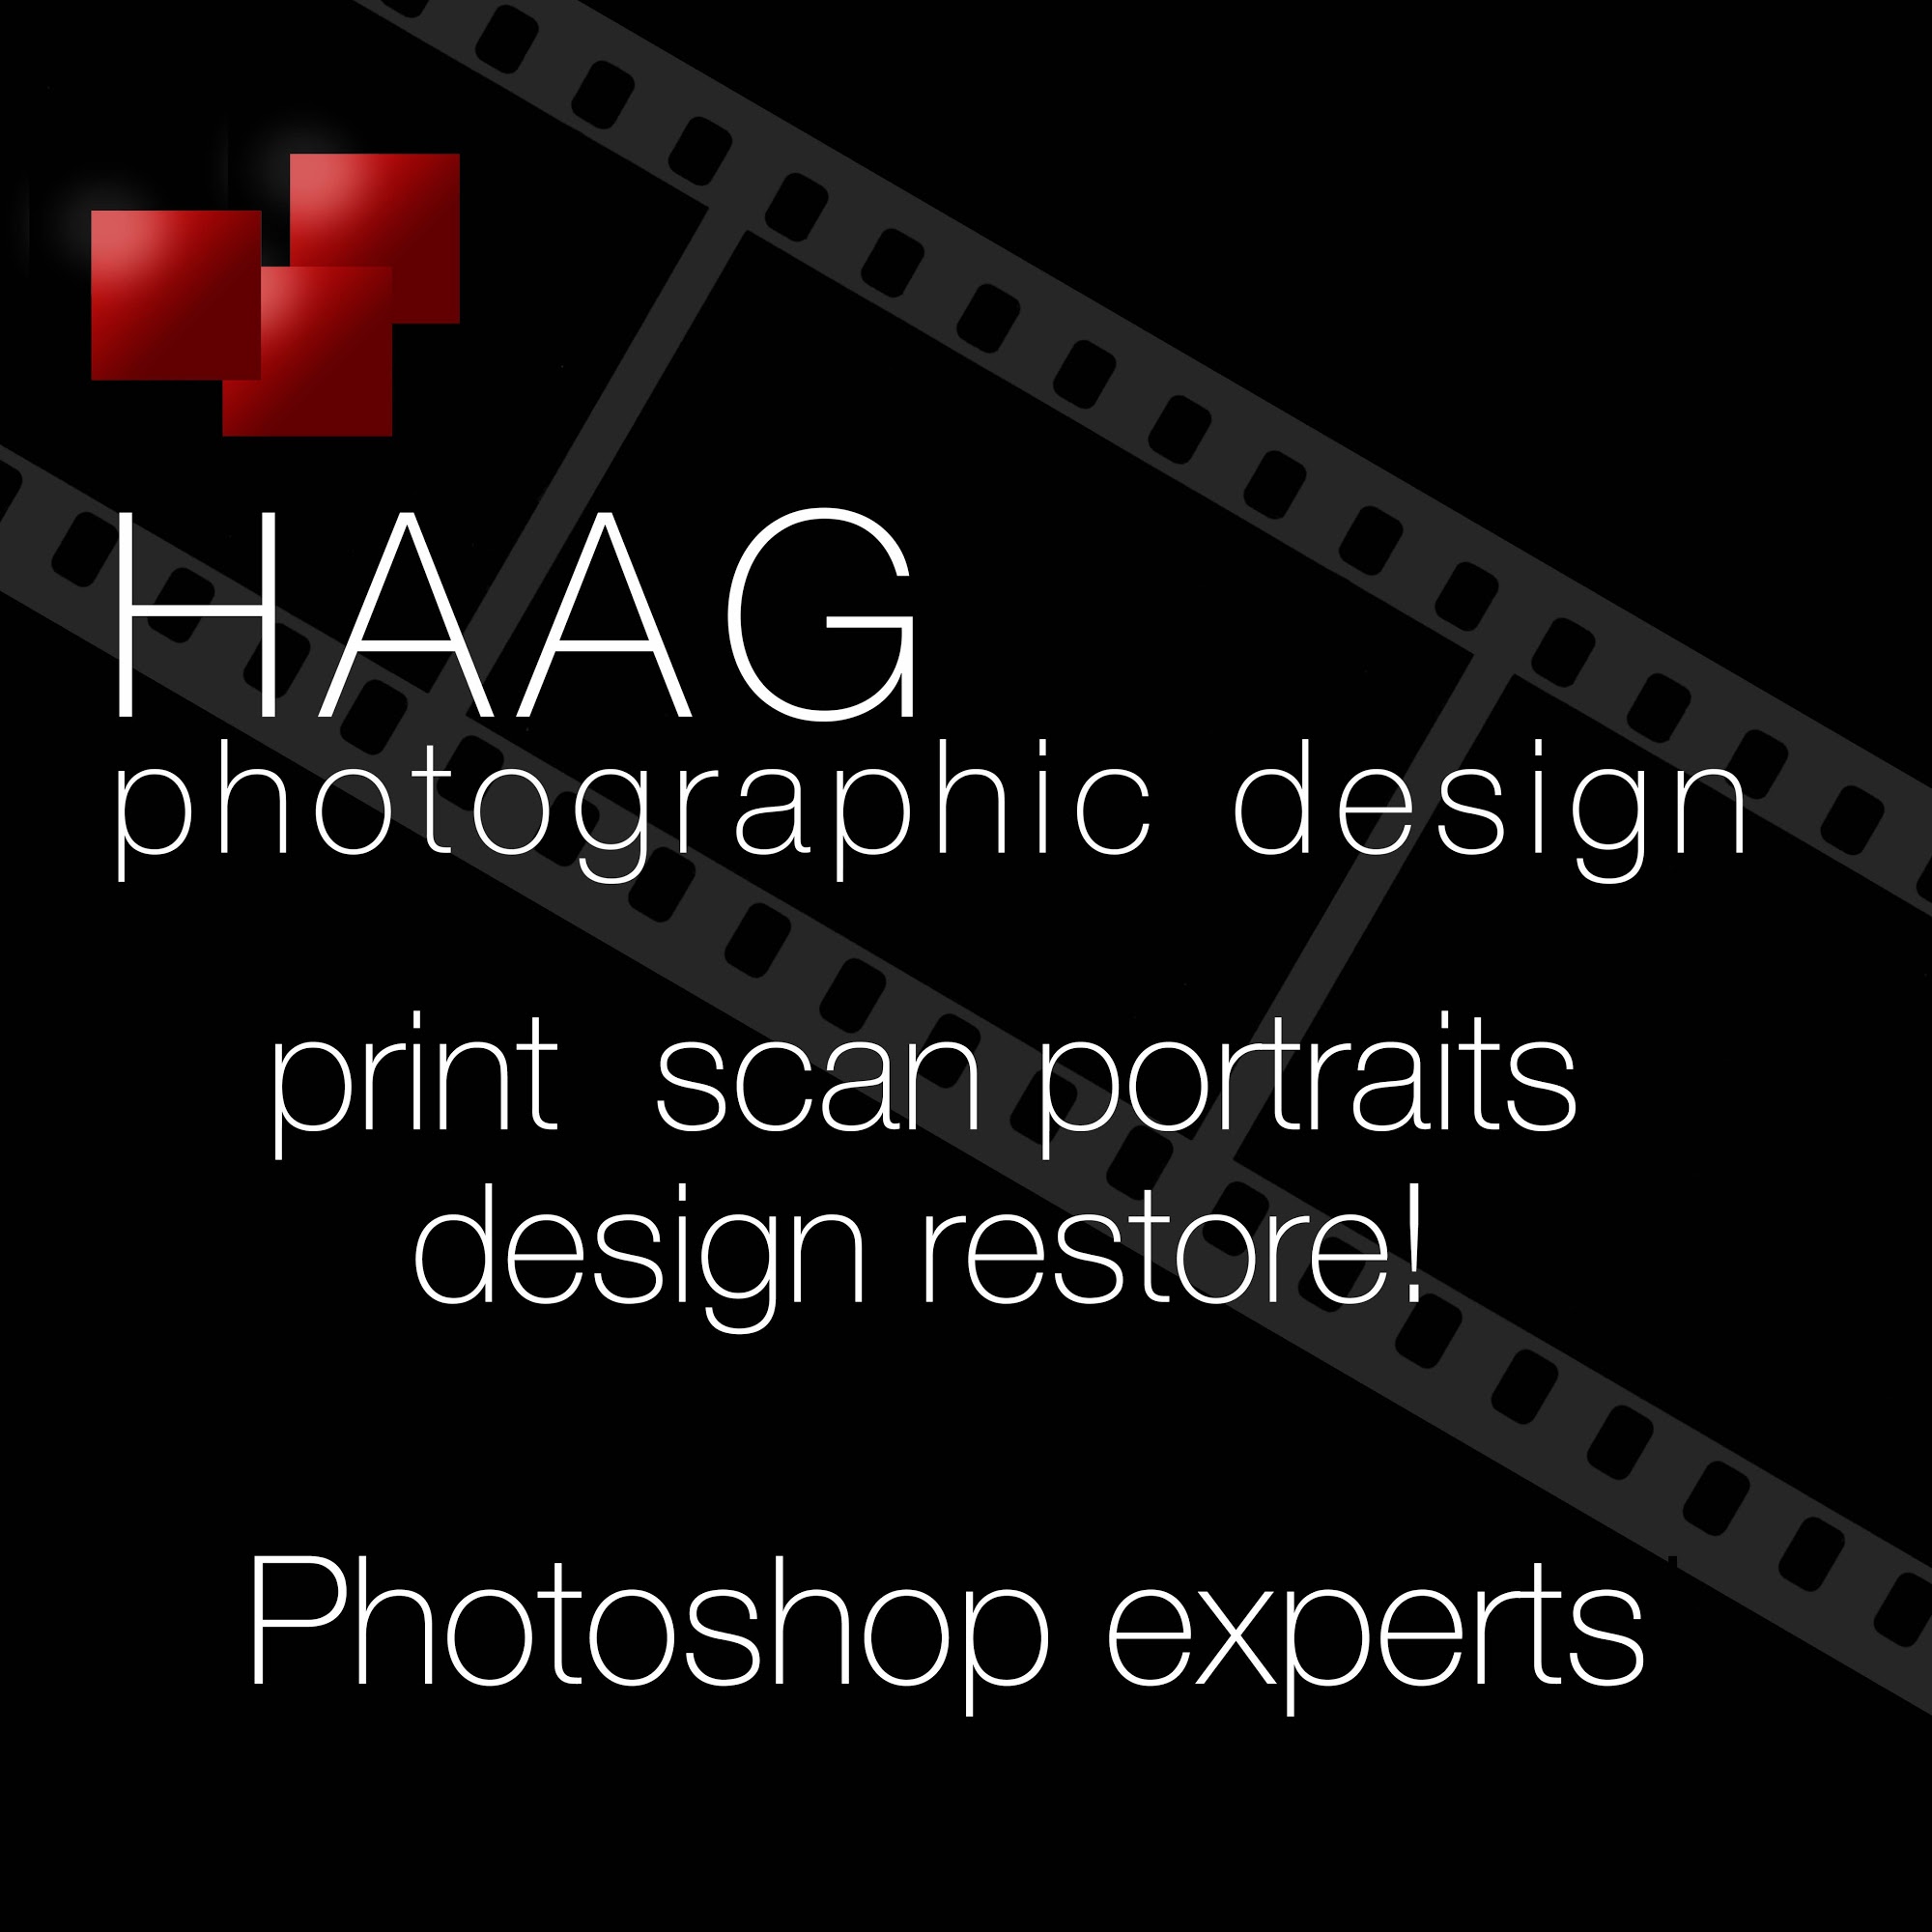 Haag Photographic Design